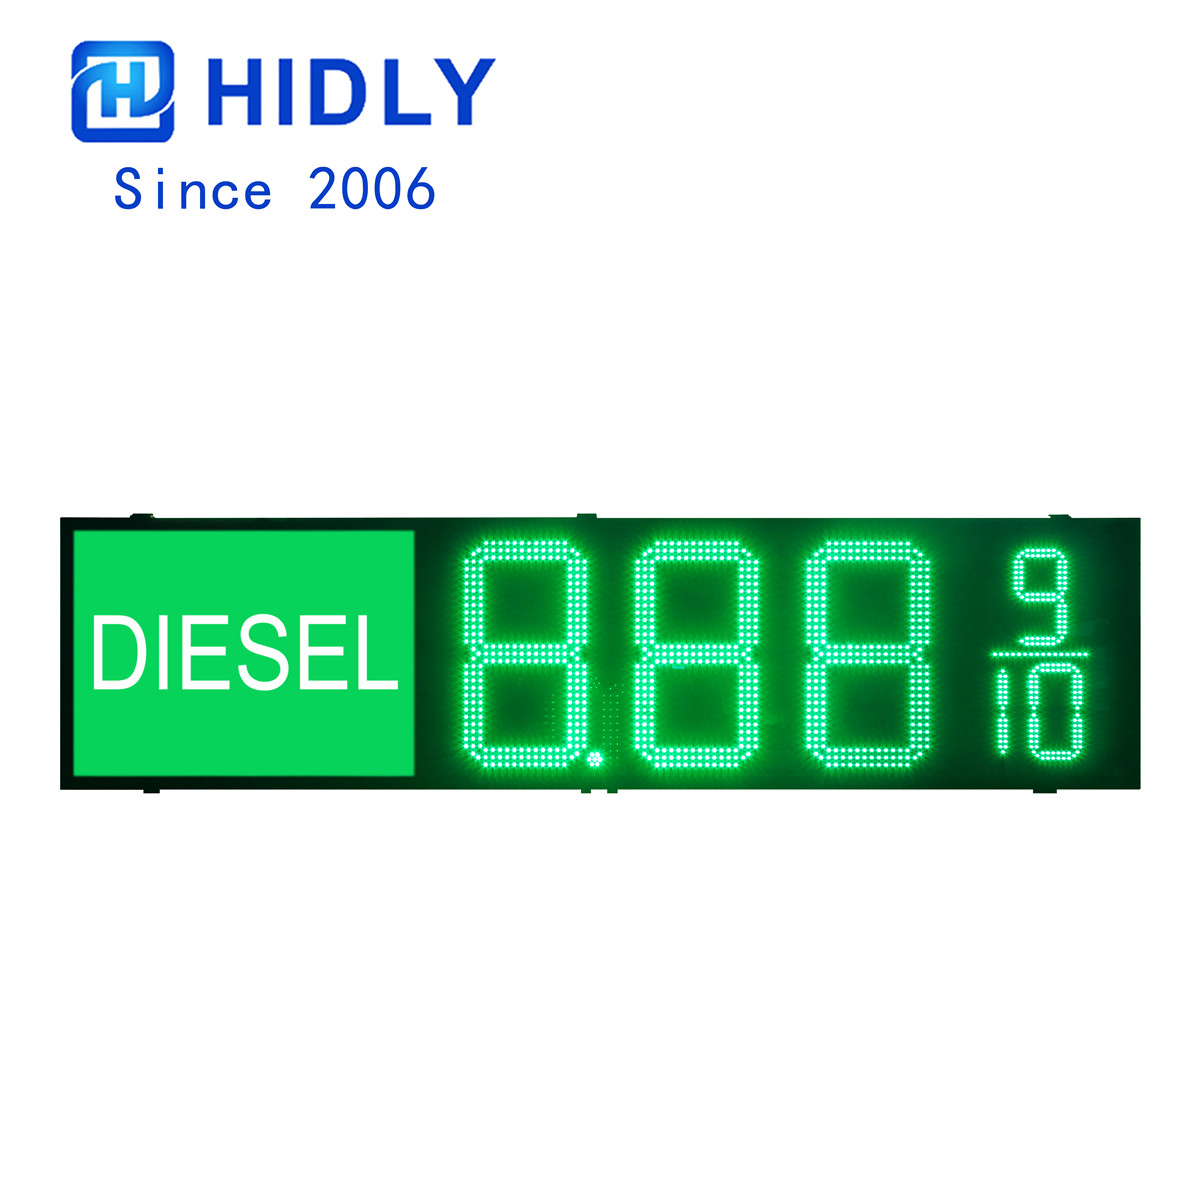 Double Diesel LED Gas Price Signs:GAS20Z8889G-DIESEL